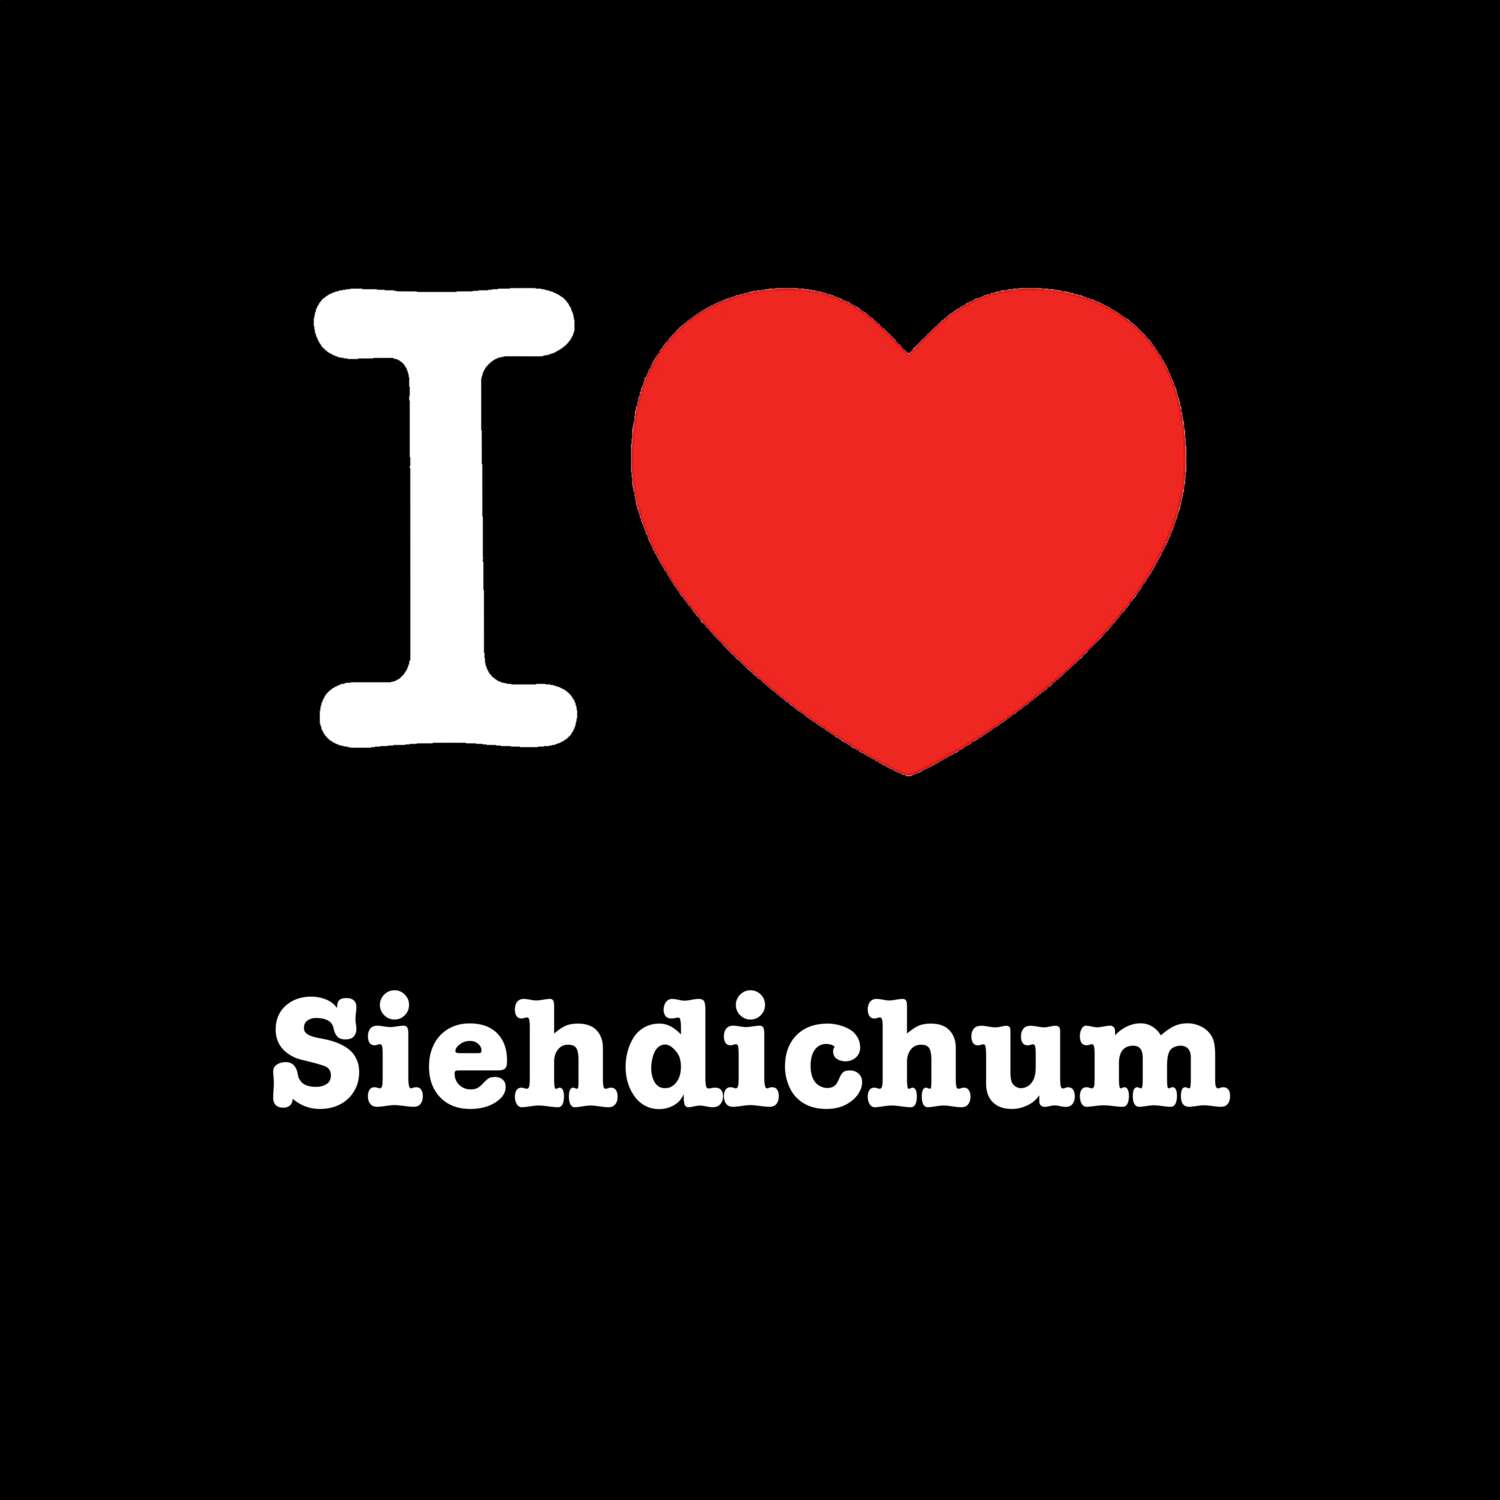 Siehdichum T-Shirt »I love«